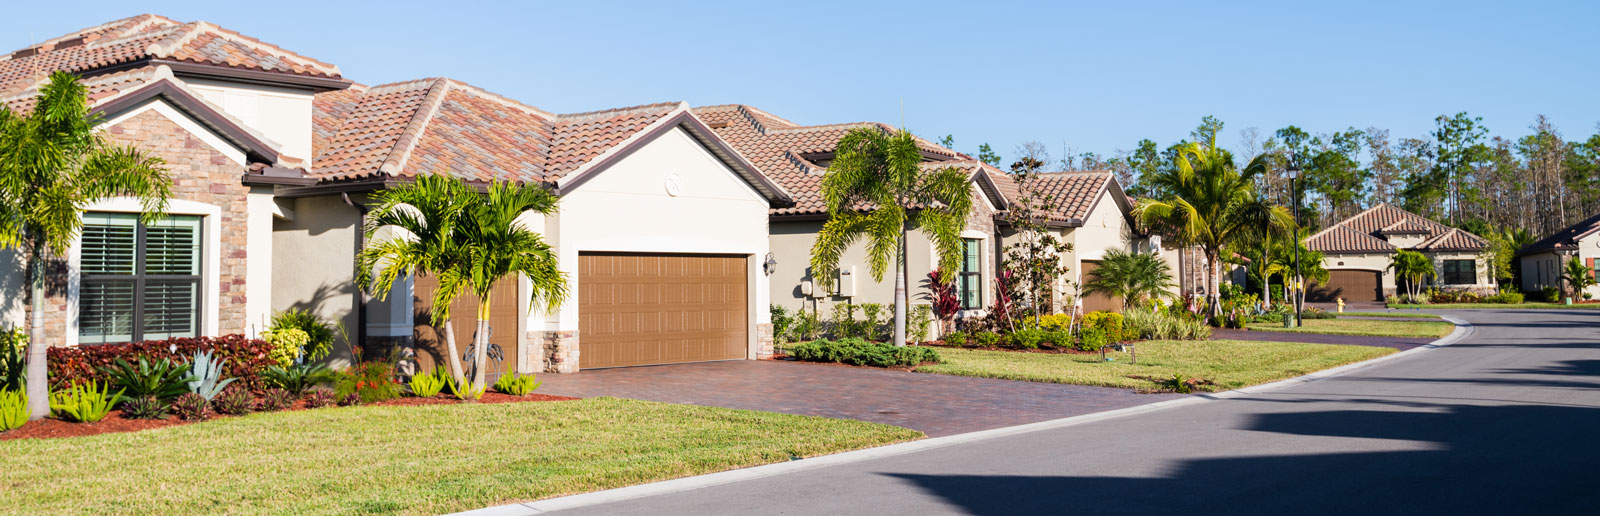 Jacksonville Reverse Mortgages, Information For Jacksonville, FL.